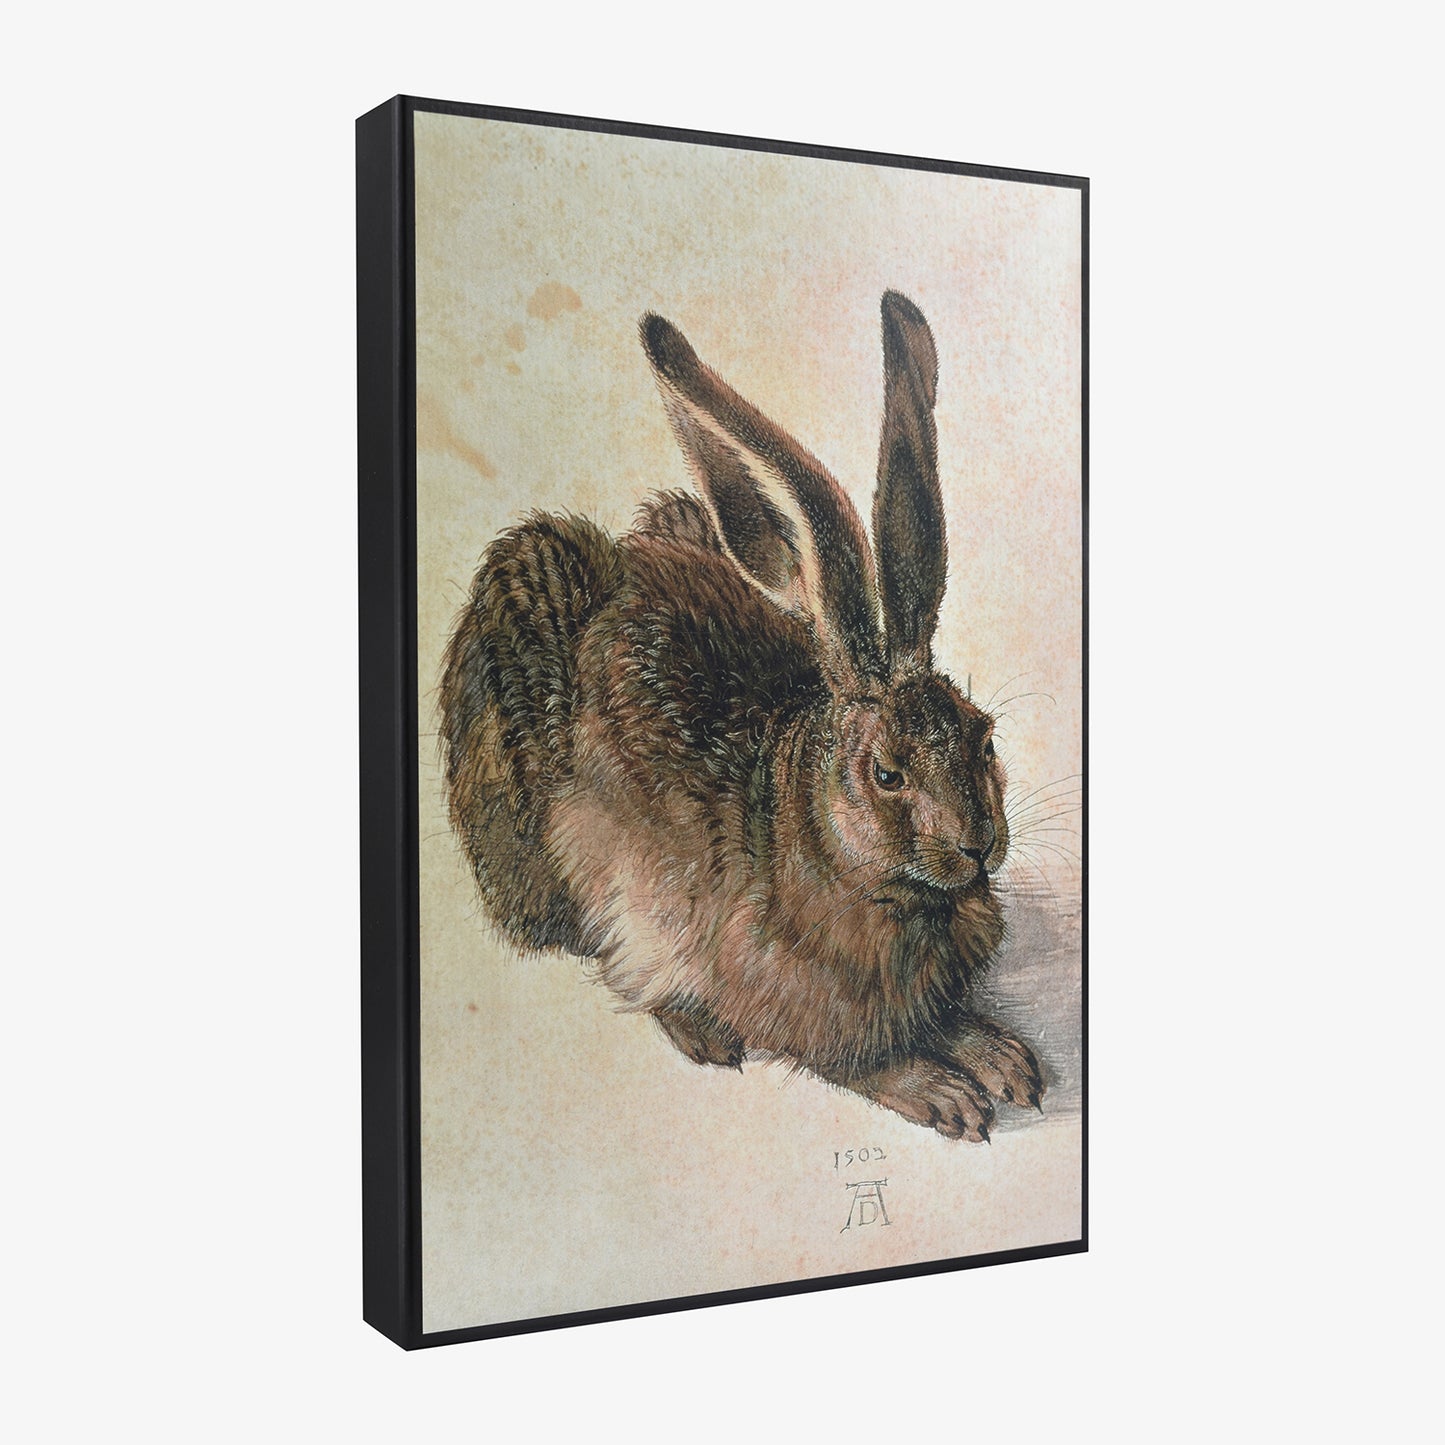 Albrecht Dürer - Hare - gift box